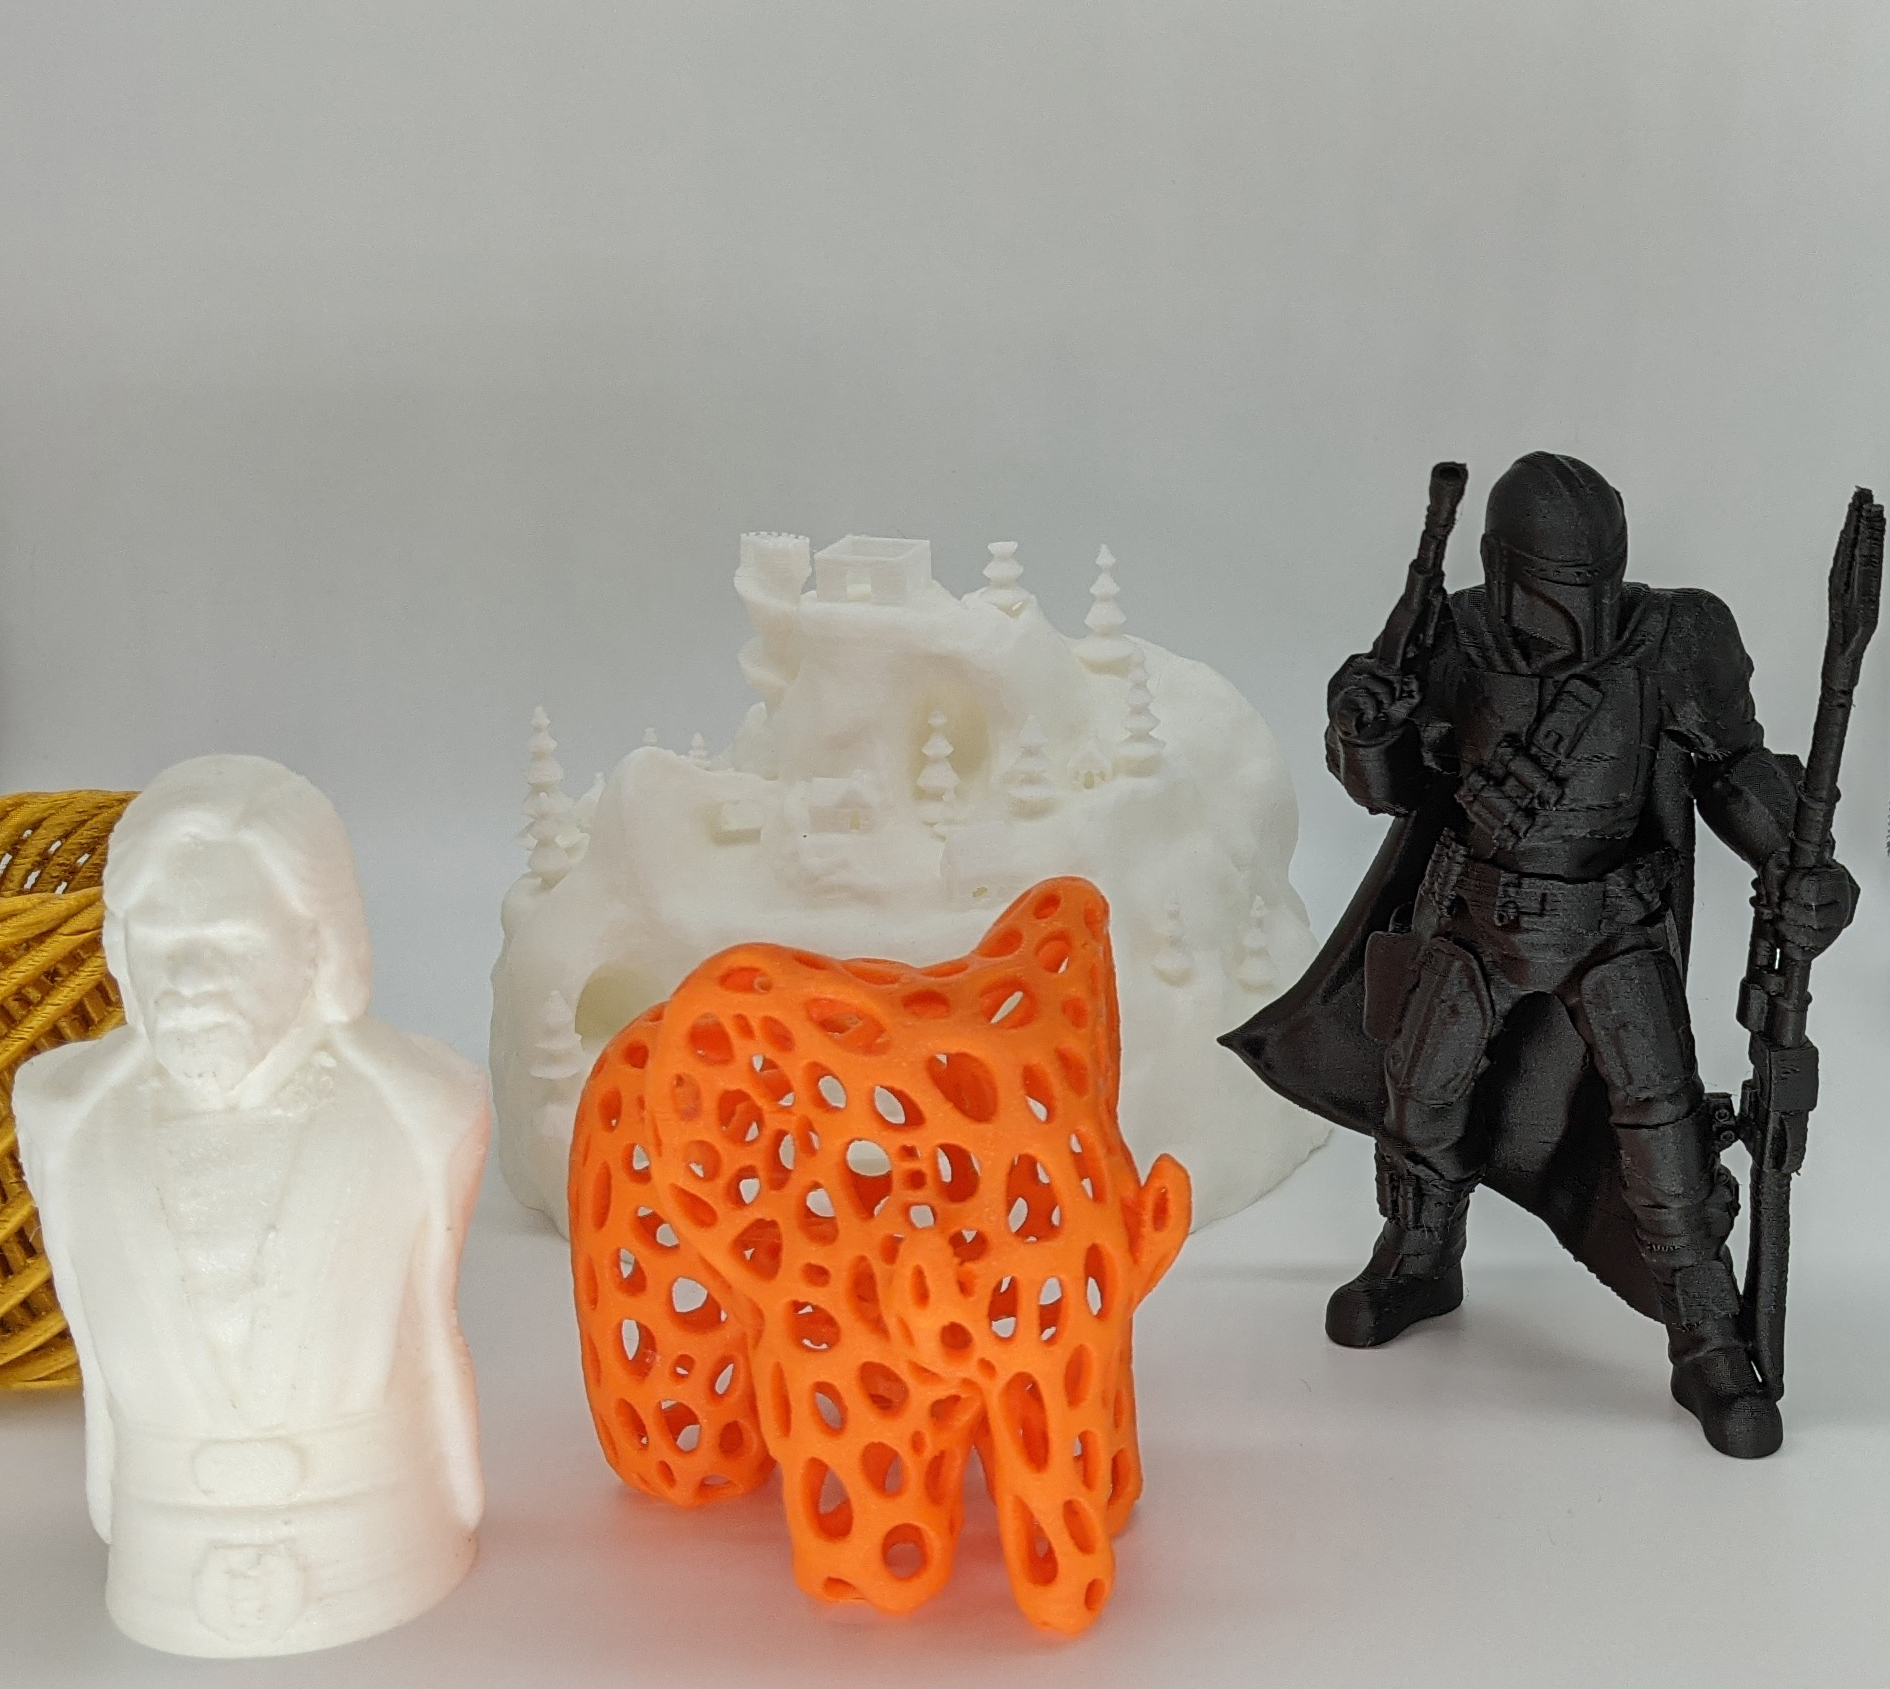 Test prints 3d printed in various PLA filaments, star wars mandalorian, christmas village, luke skywalker, an orange elephant